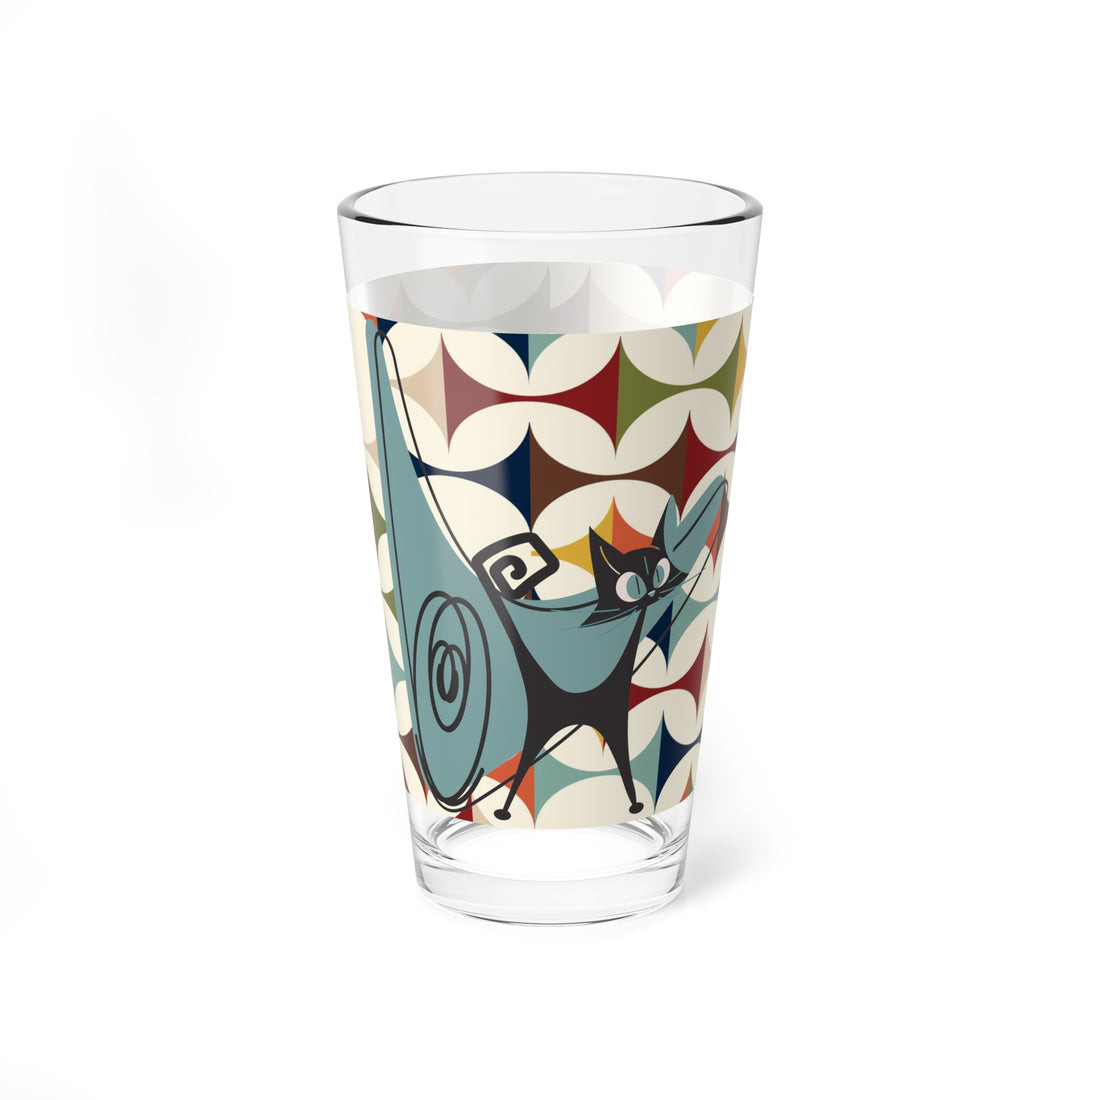 Atomic Cat Drinkware, Mid Century Modern Barware, Scandinavian Designed Geometric Drinking, Mixing Glass, 16oz